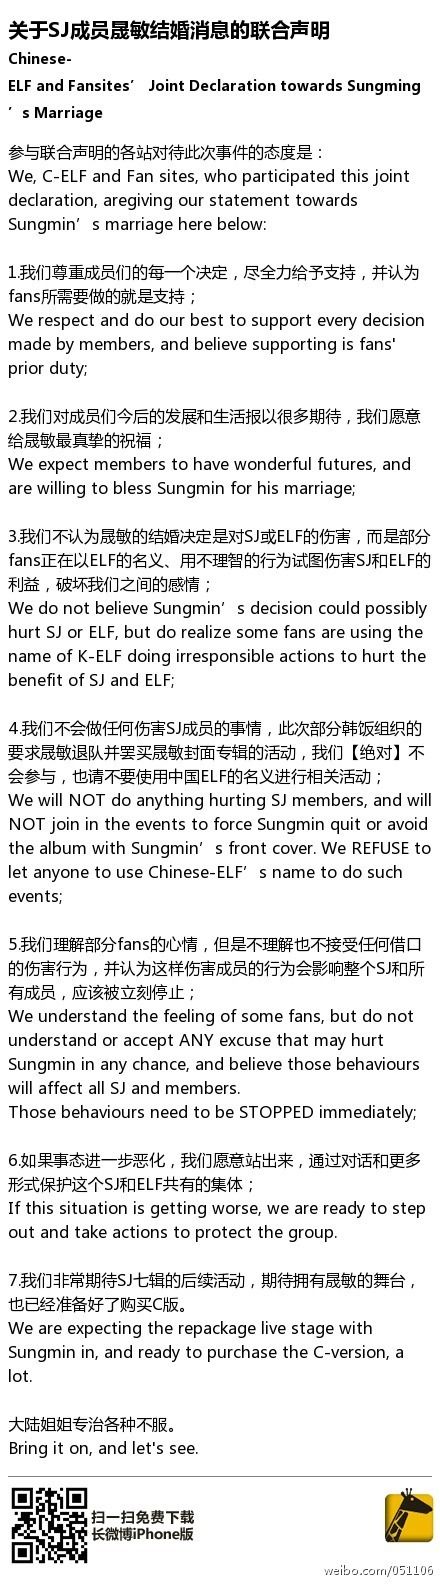 C-ELFs showing support for Super Junior Sungmin's wedding